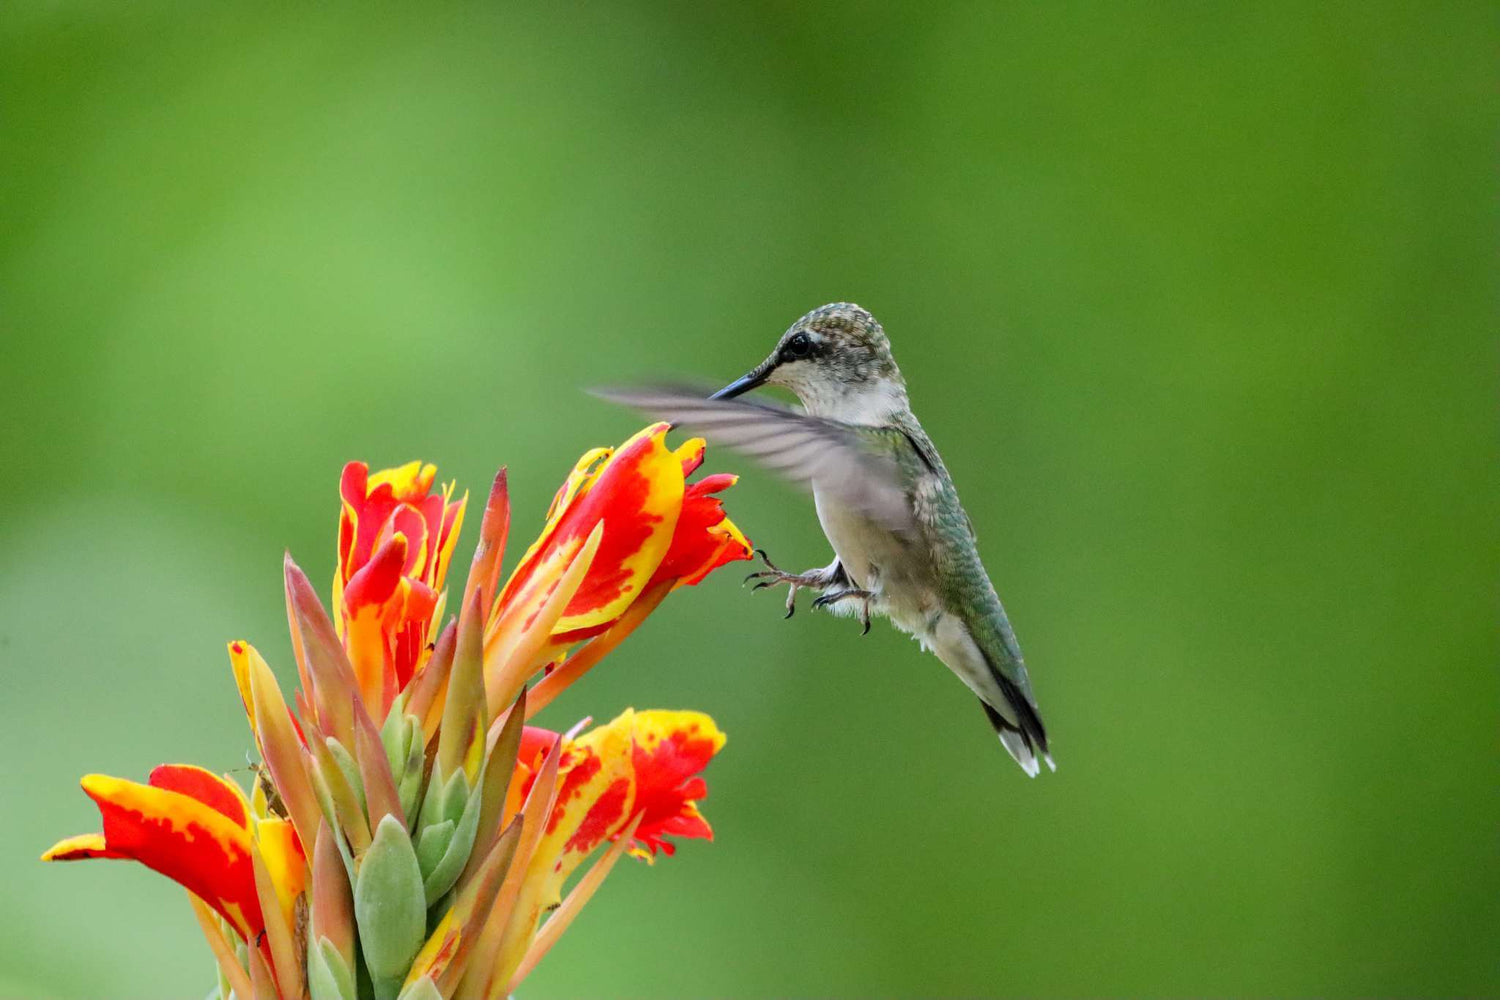 photography of a bird near a vibrant flower